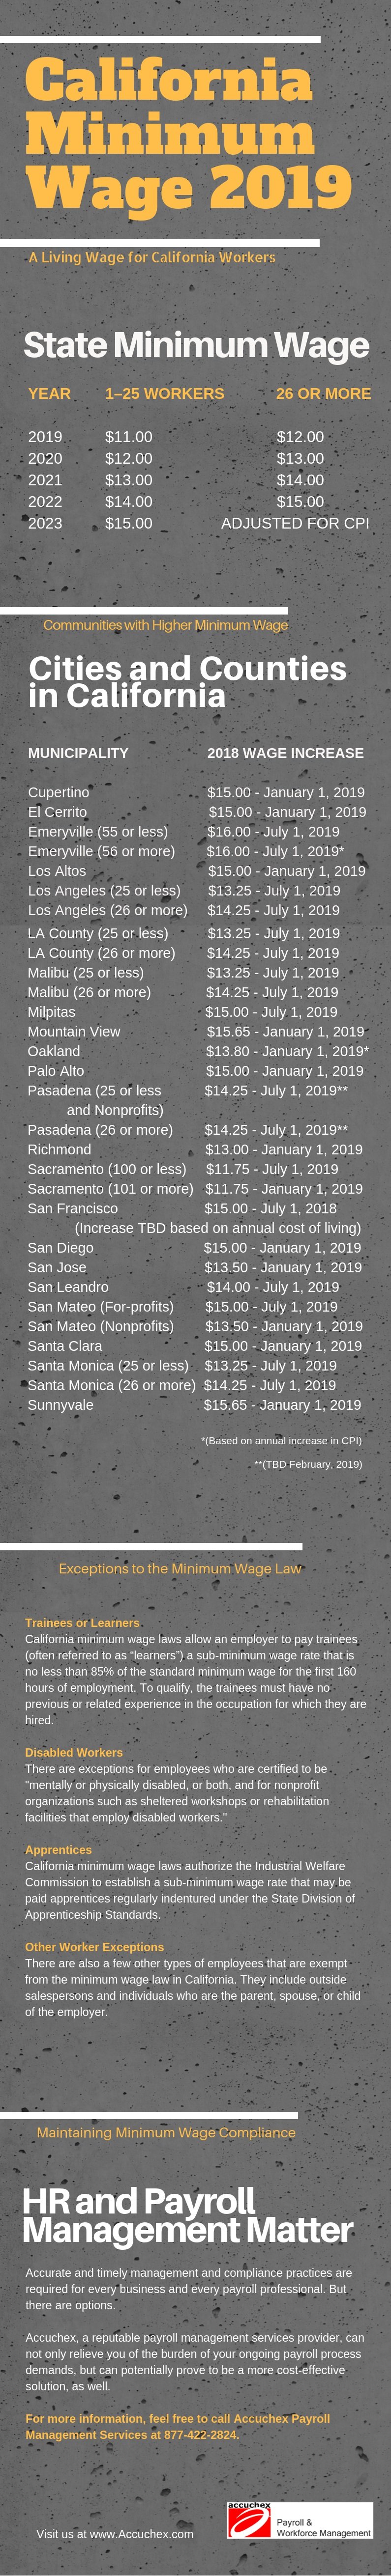 California Minimum Wage 2019